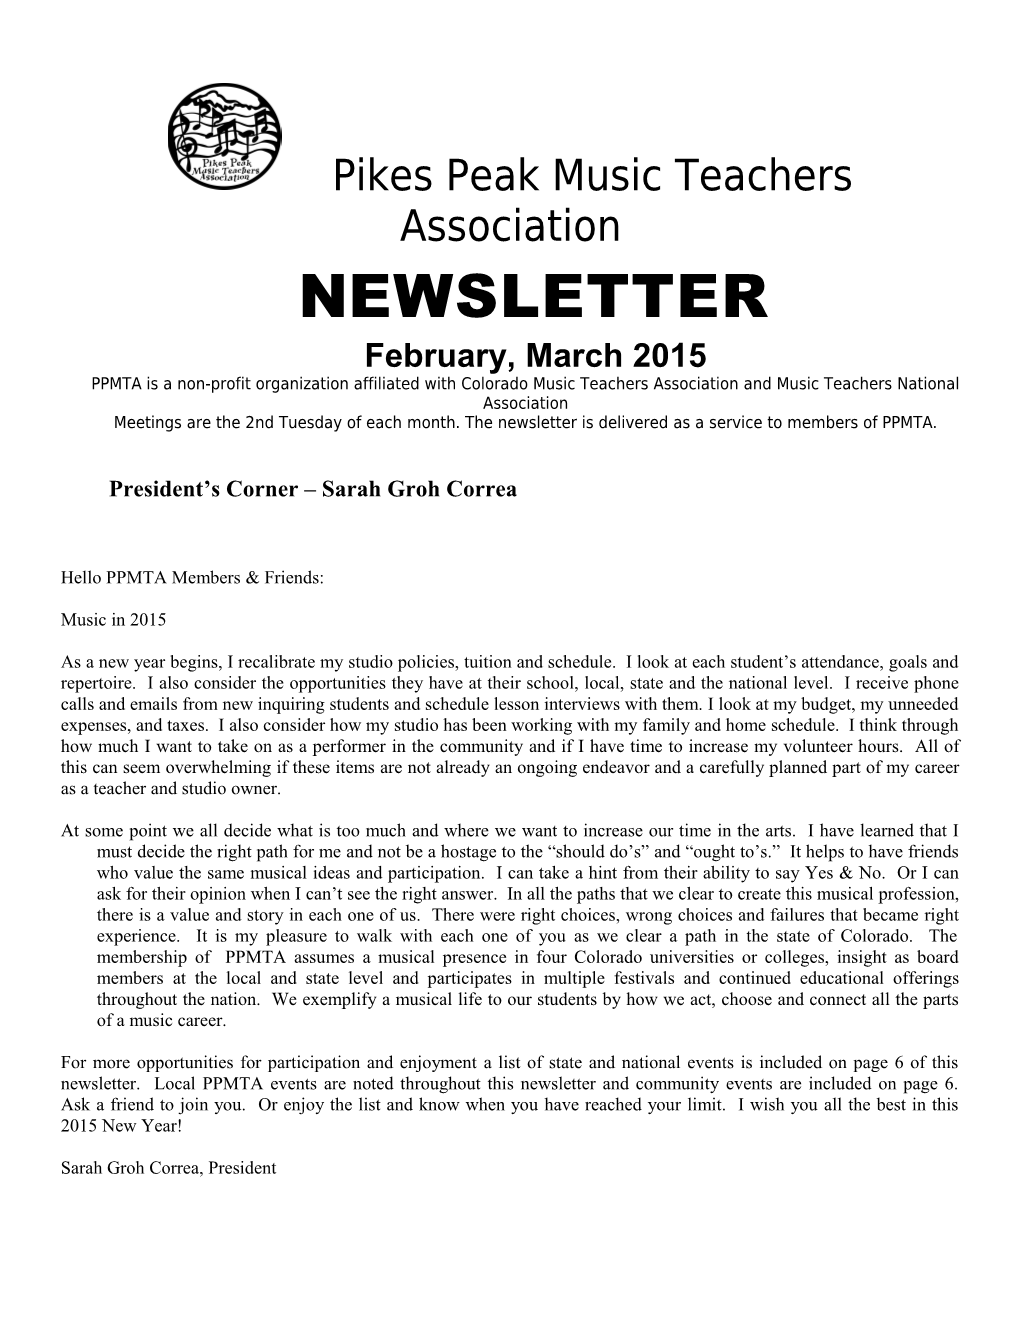 Pikes Peak Music Teachers Association